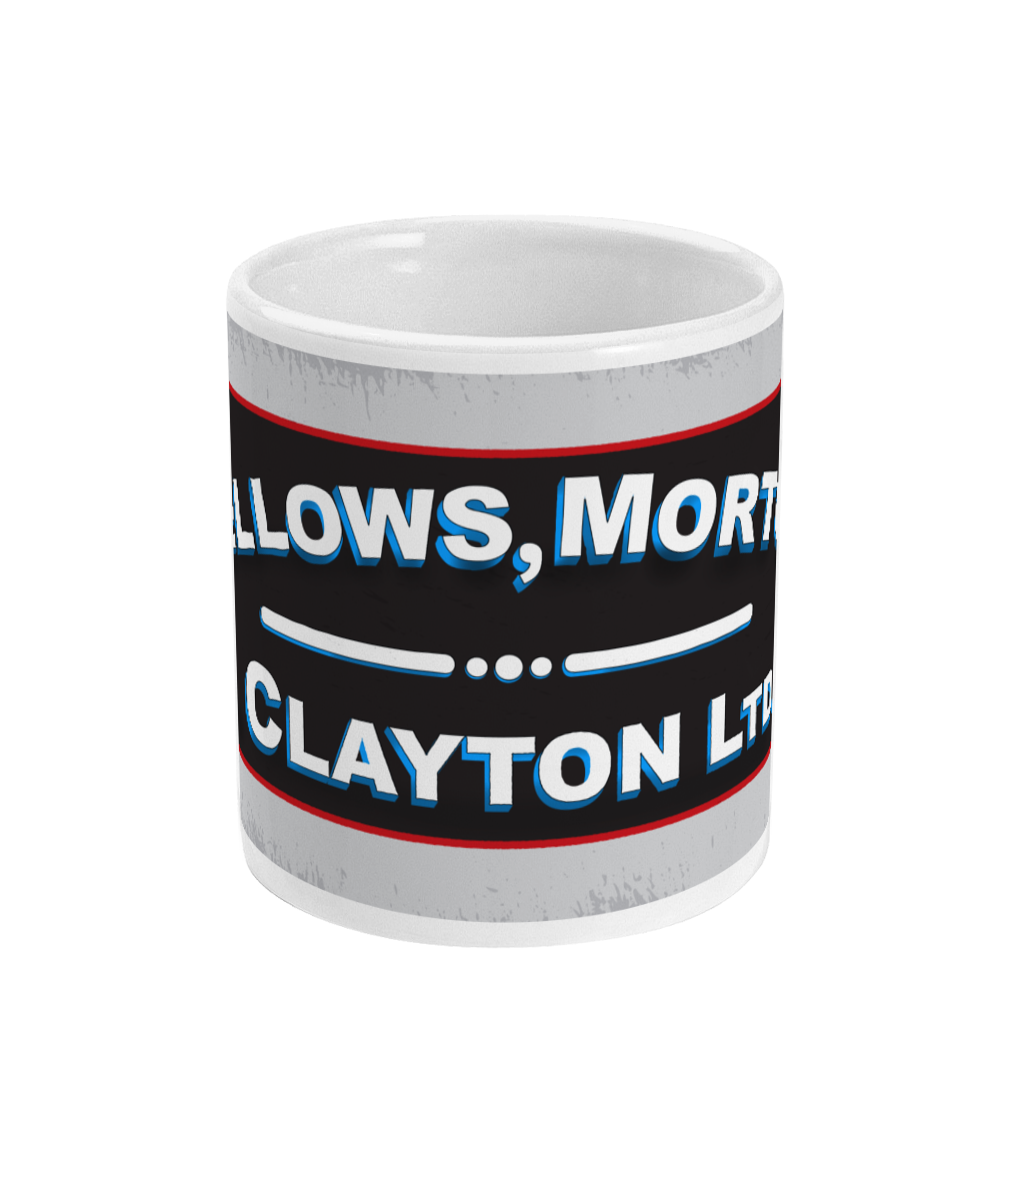 Fellows, Morton & Clayton Ceramic Mug - Black, White & Red